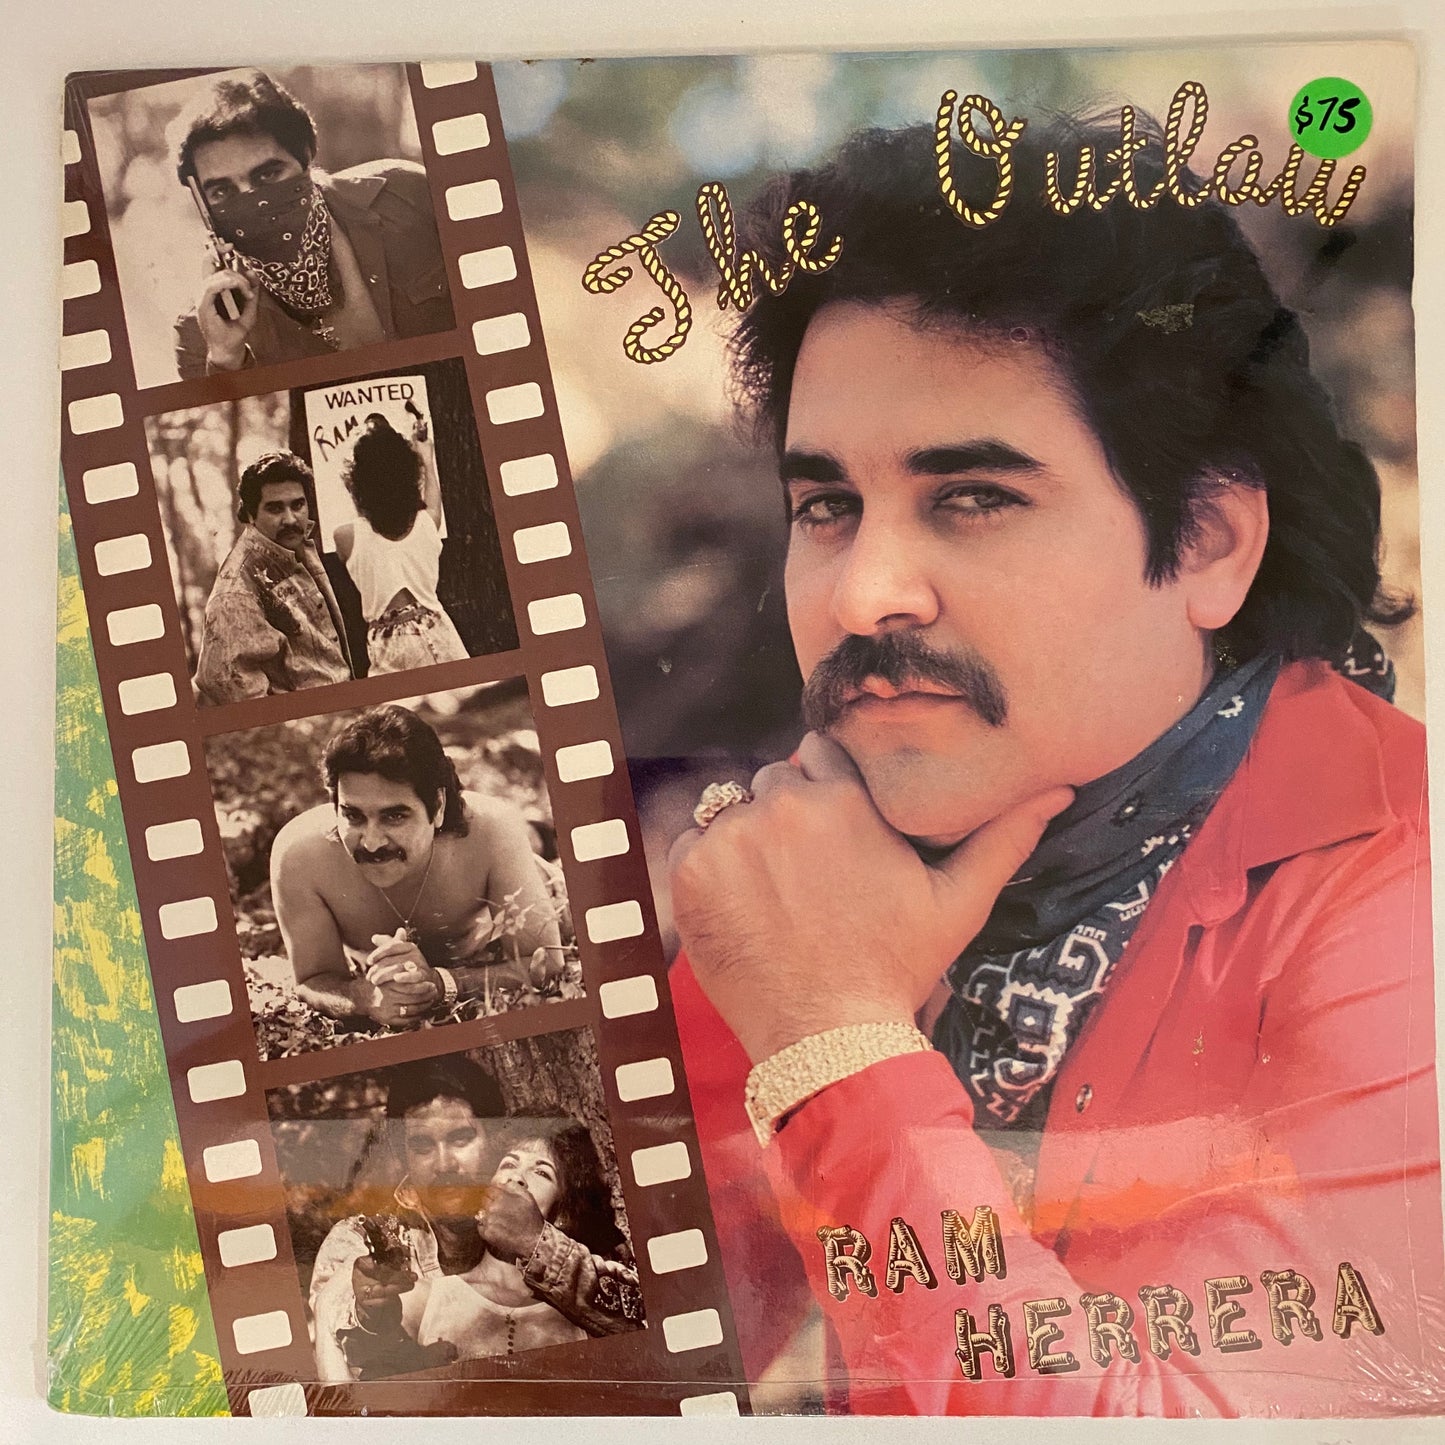 Ram Herrera - The Outlaw (Vinyl)